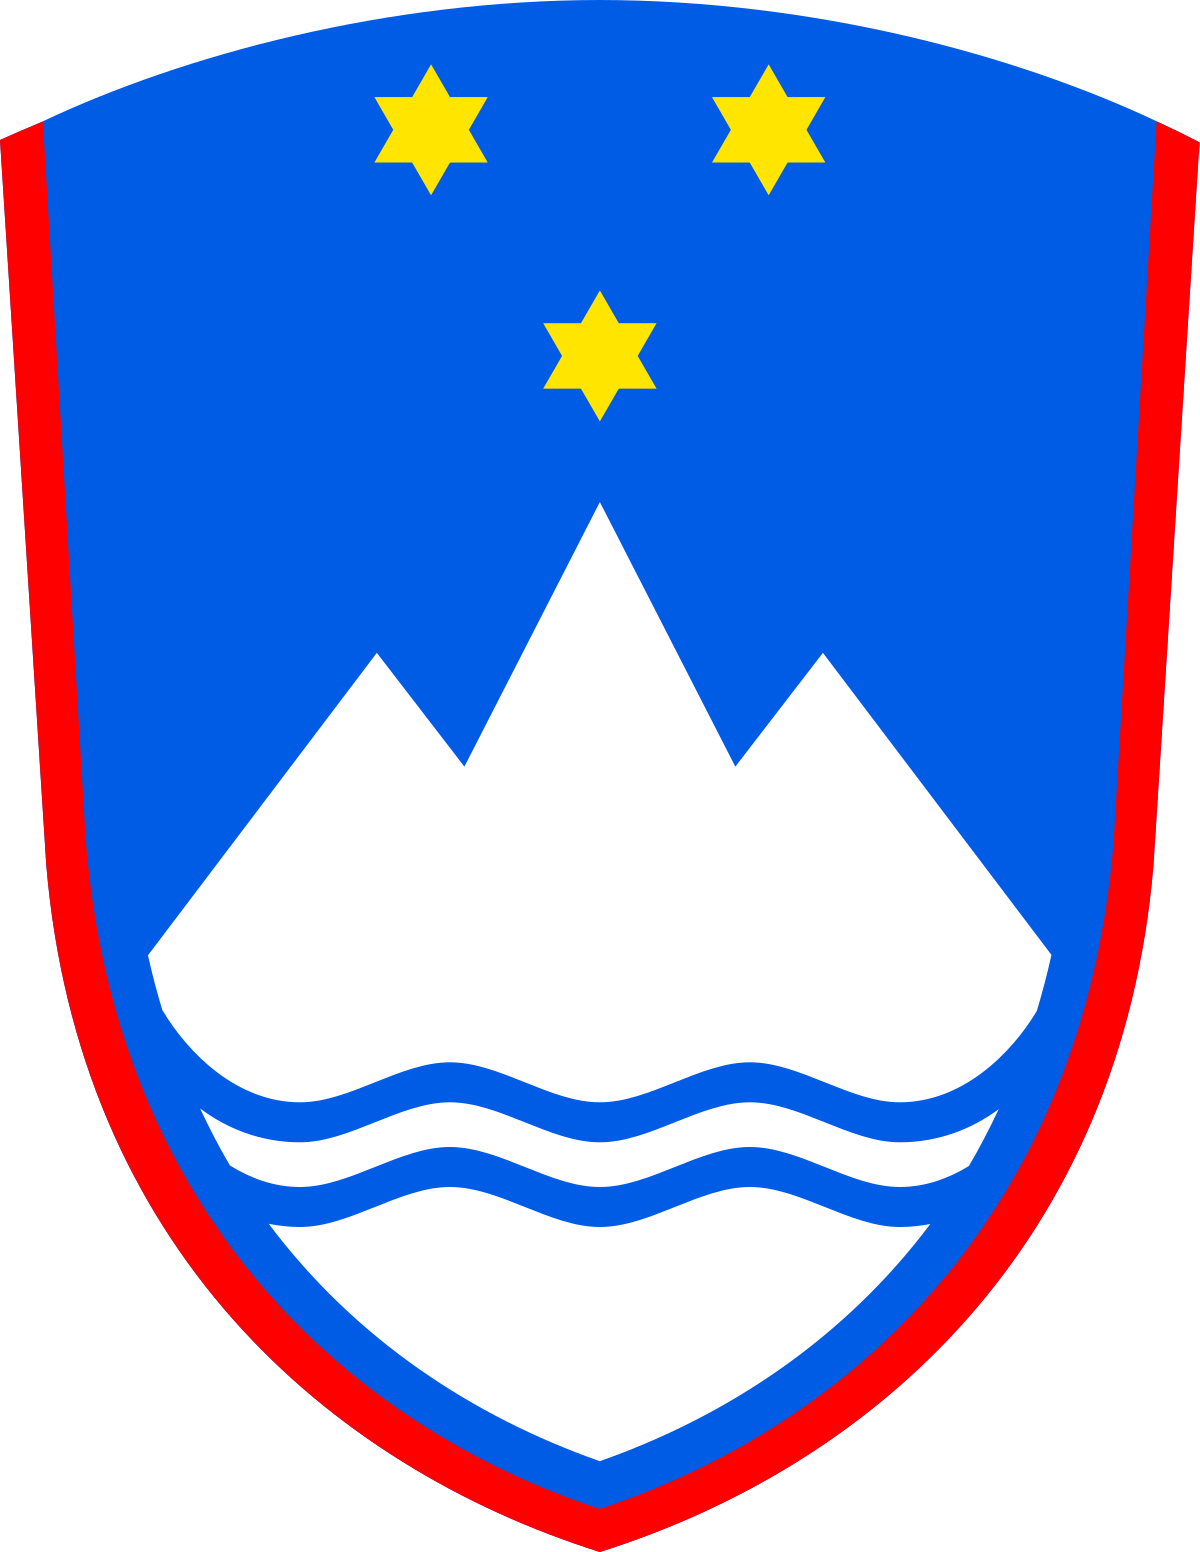 Coat of arms of Slovenia - Wikipedia